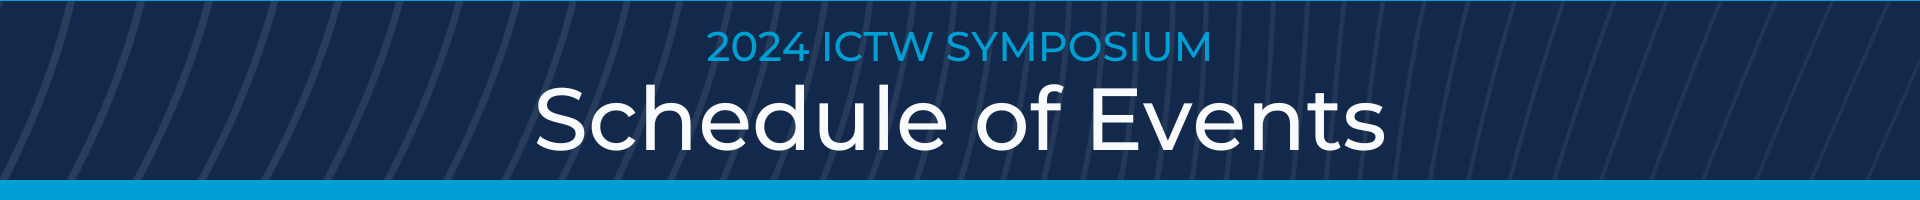 2024 ICTW Symposium: Schedule of Events